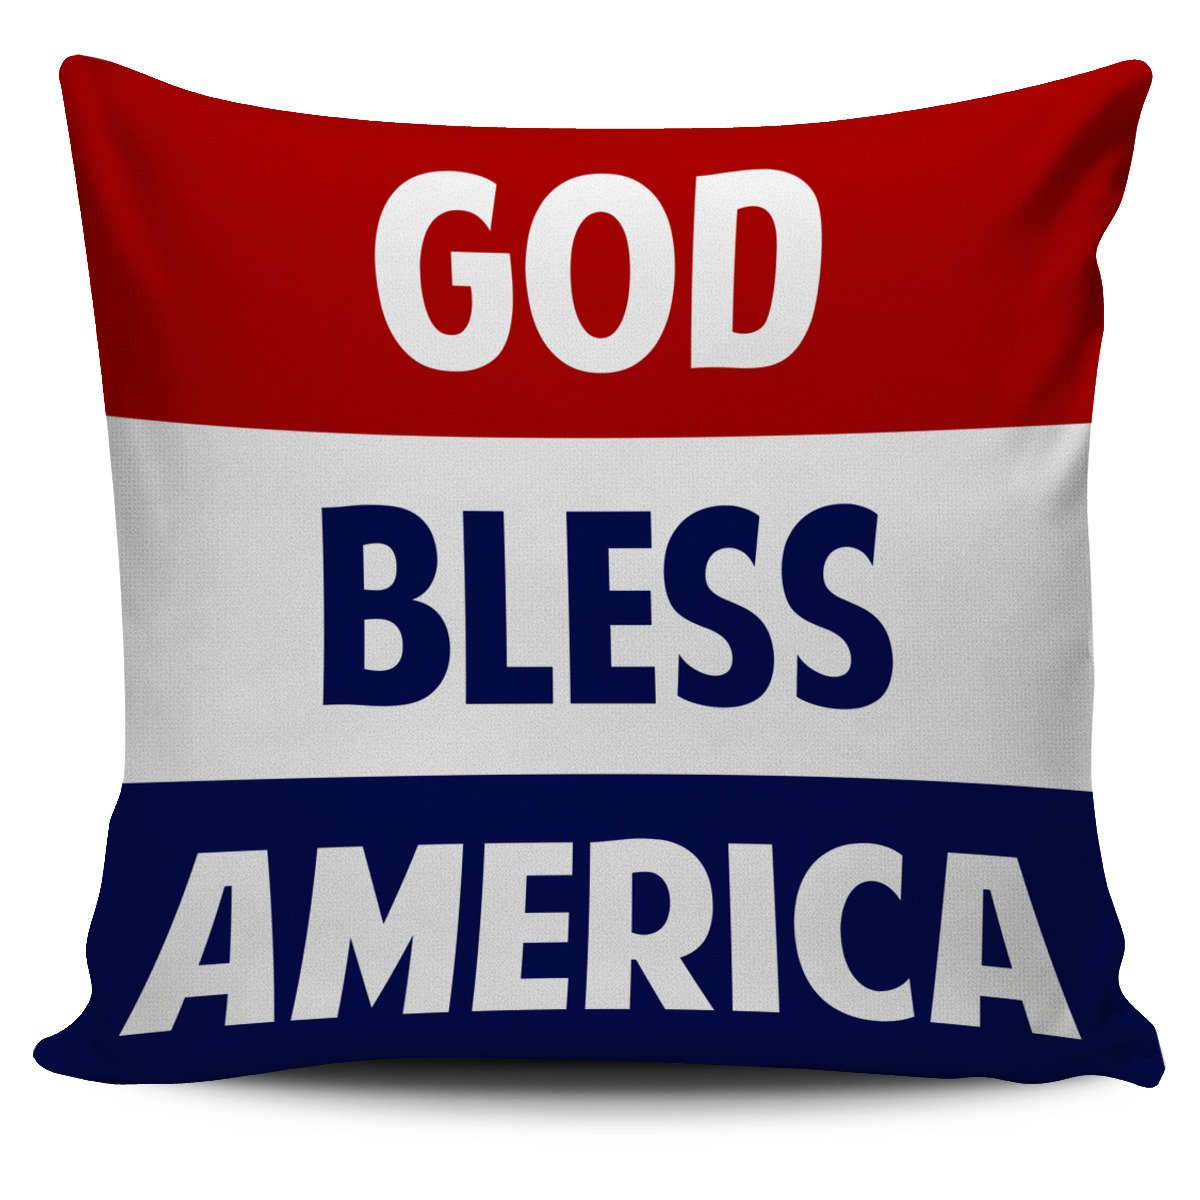 FREE God Bless America Pillow Case